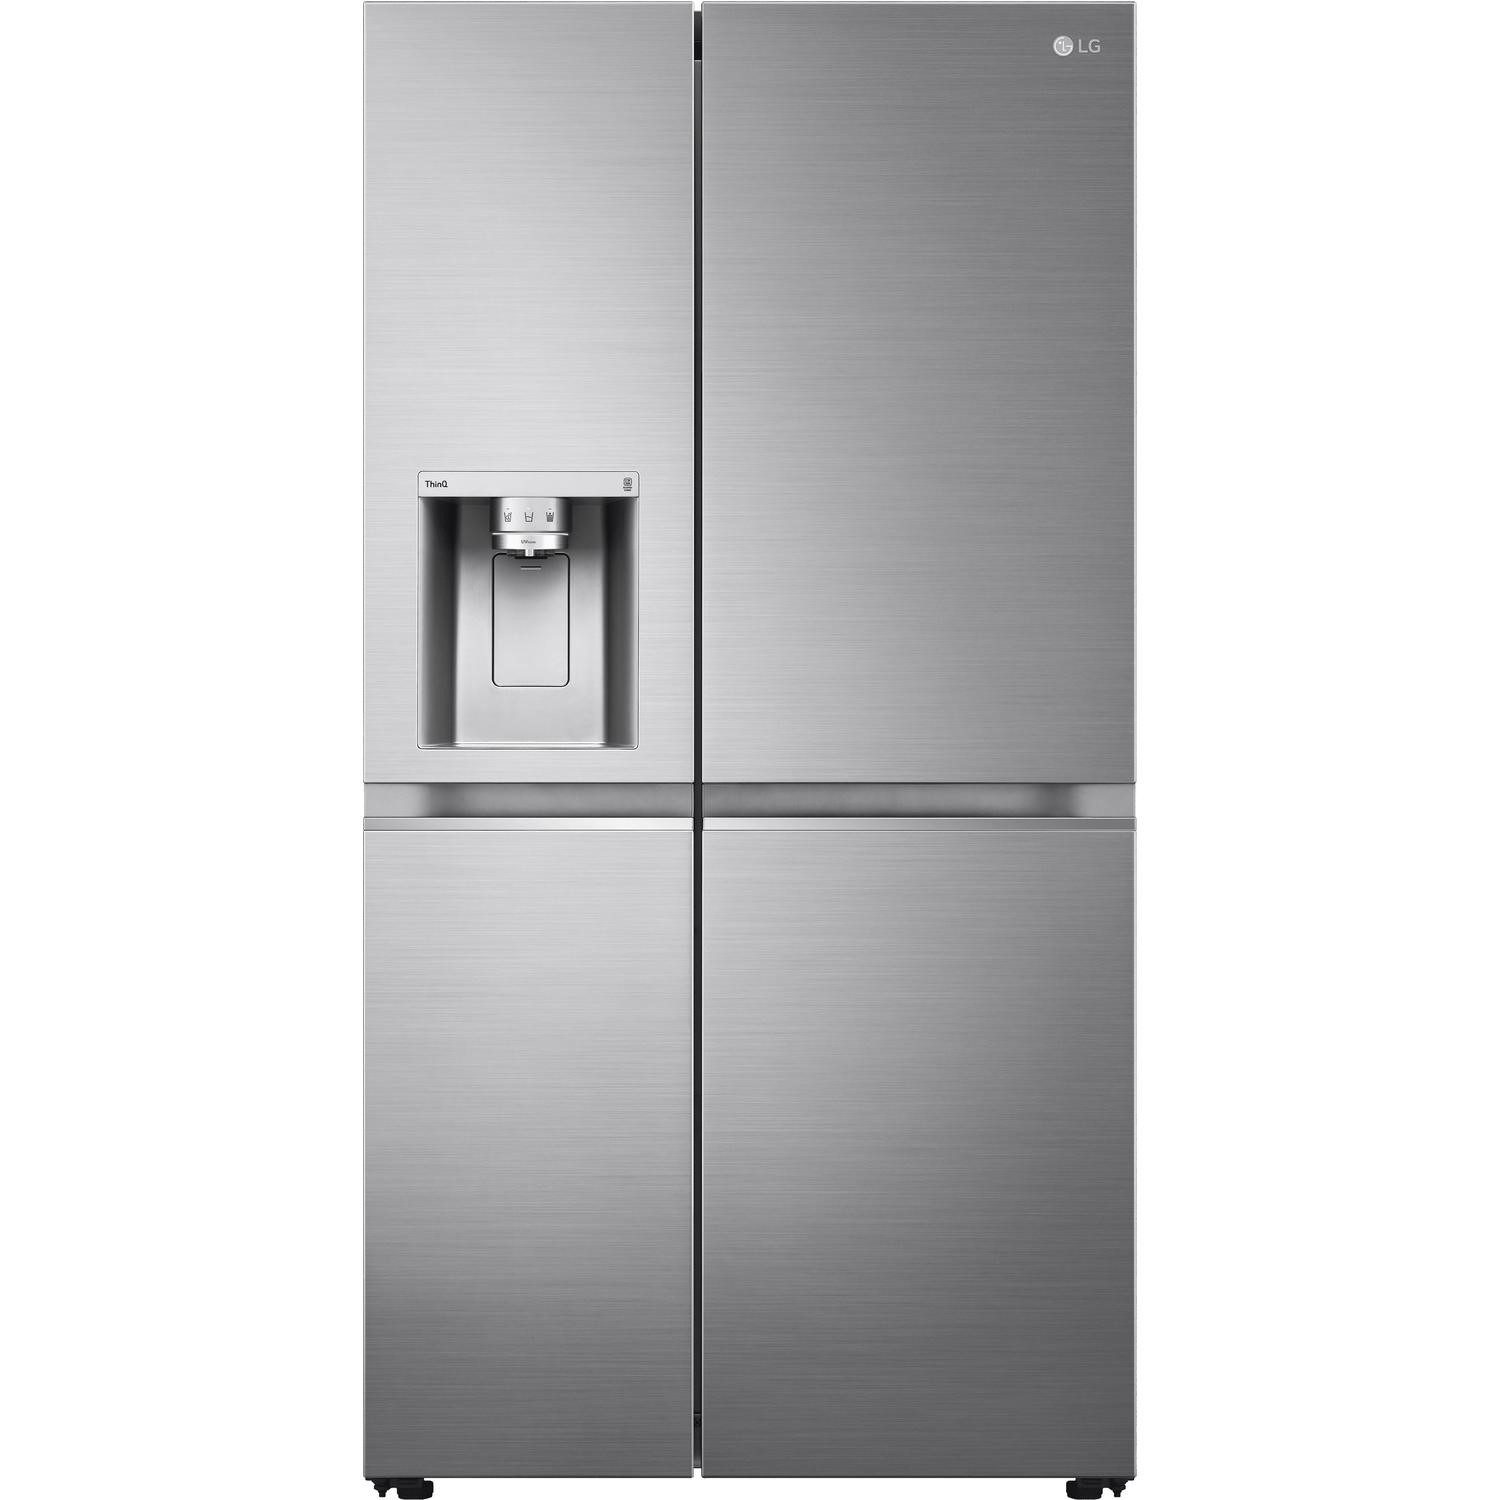 LG UVnano American Fridge Freezer With Ice And Water Dispenser - Shiny Steel